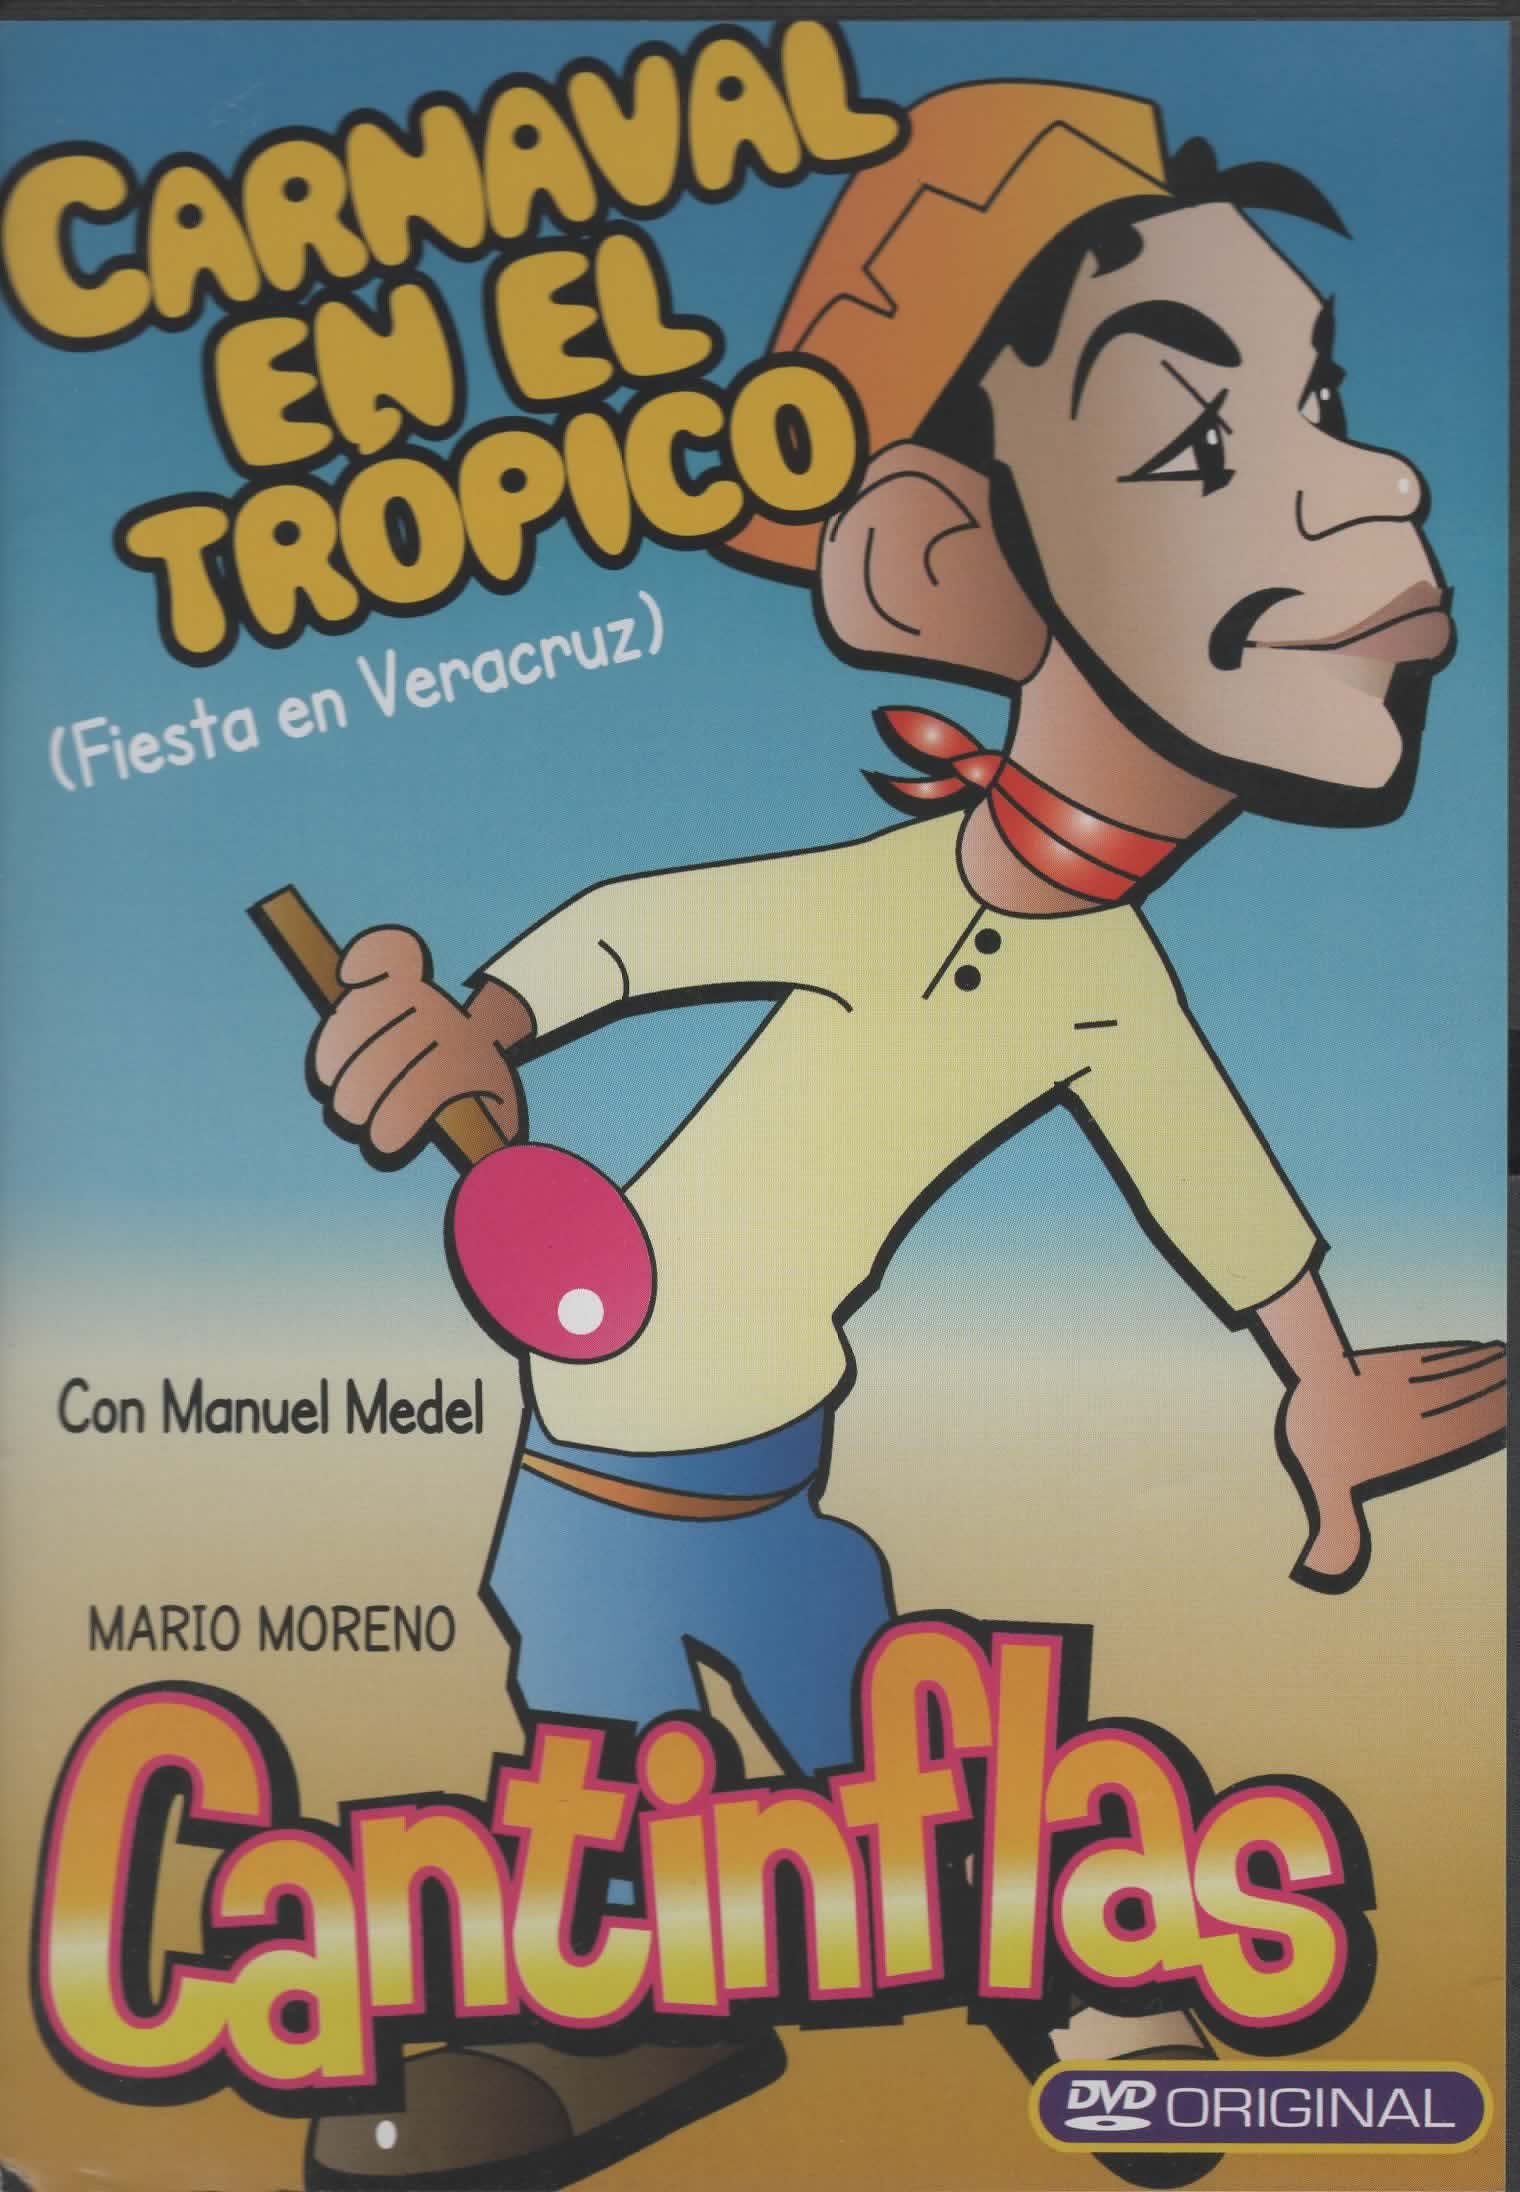 DVD Cantinflas - carnaval en el trópico 2